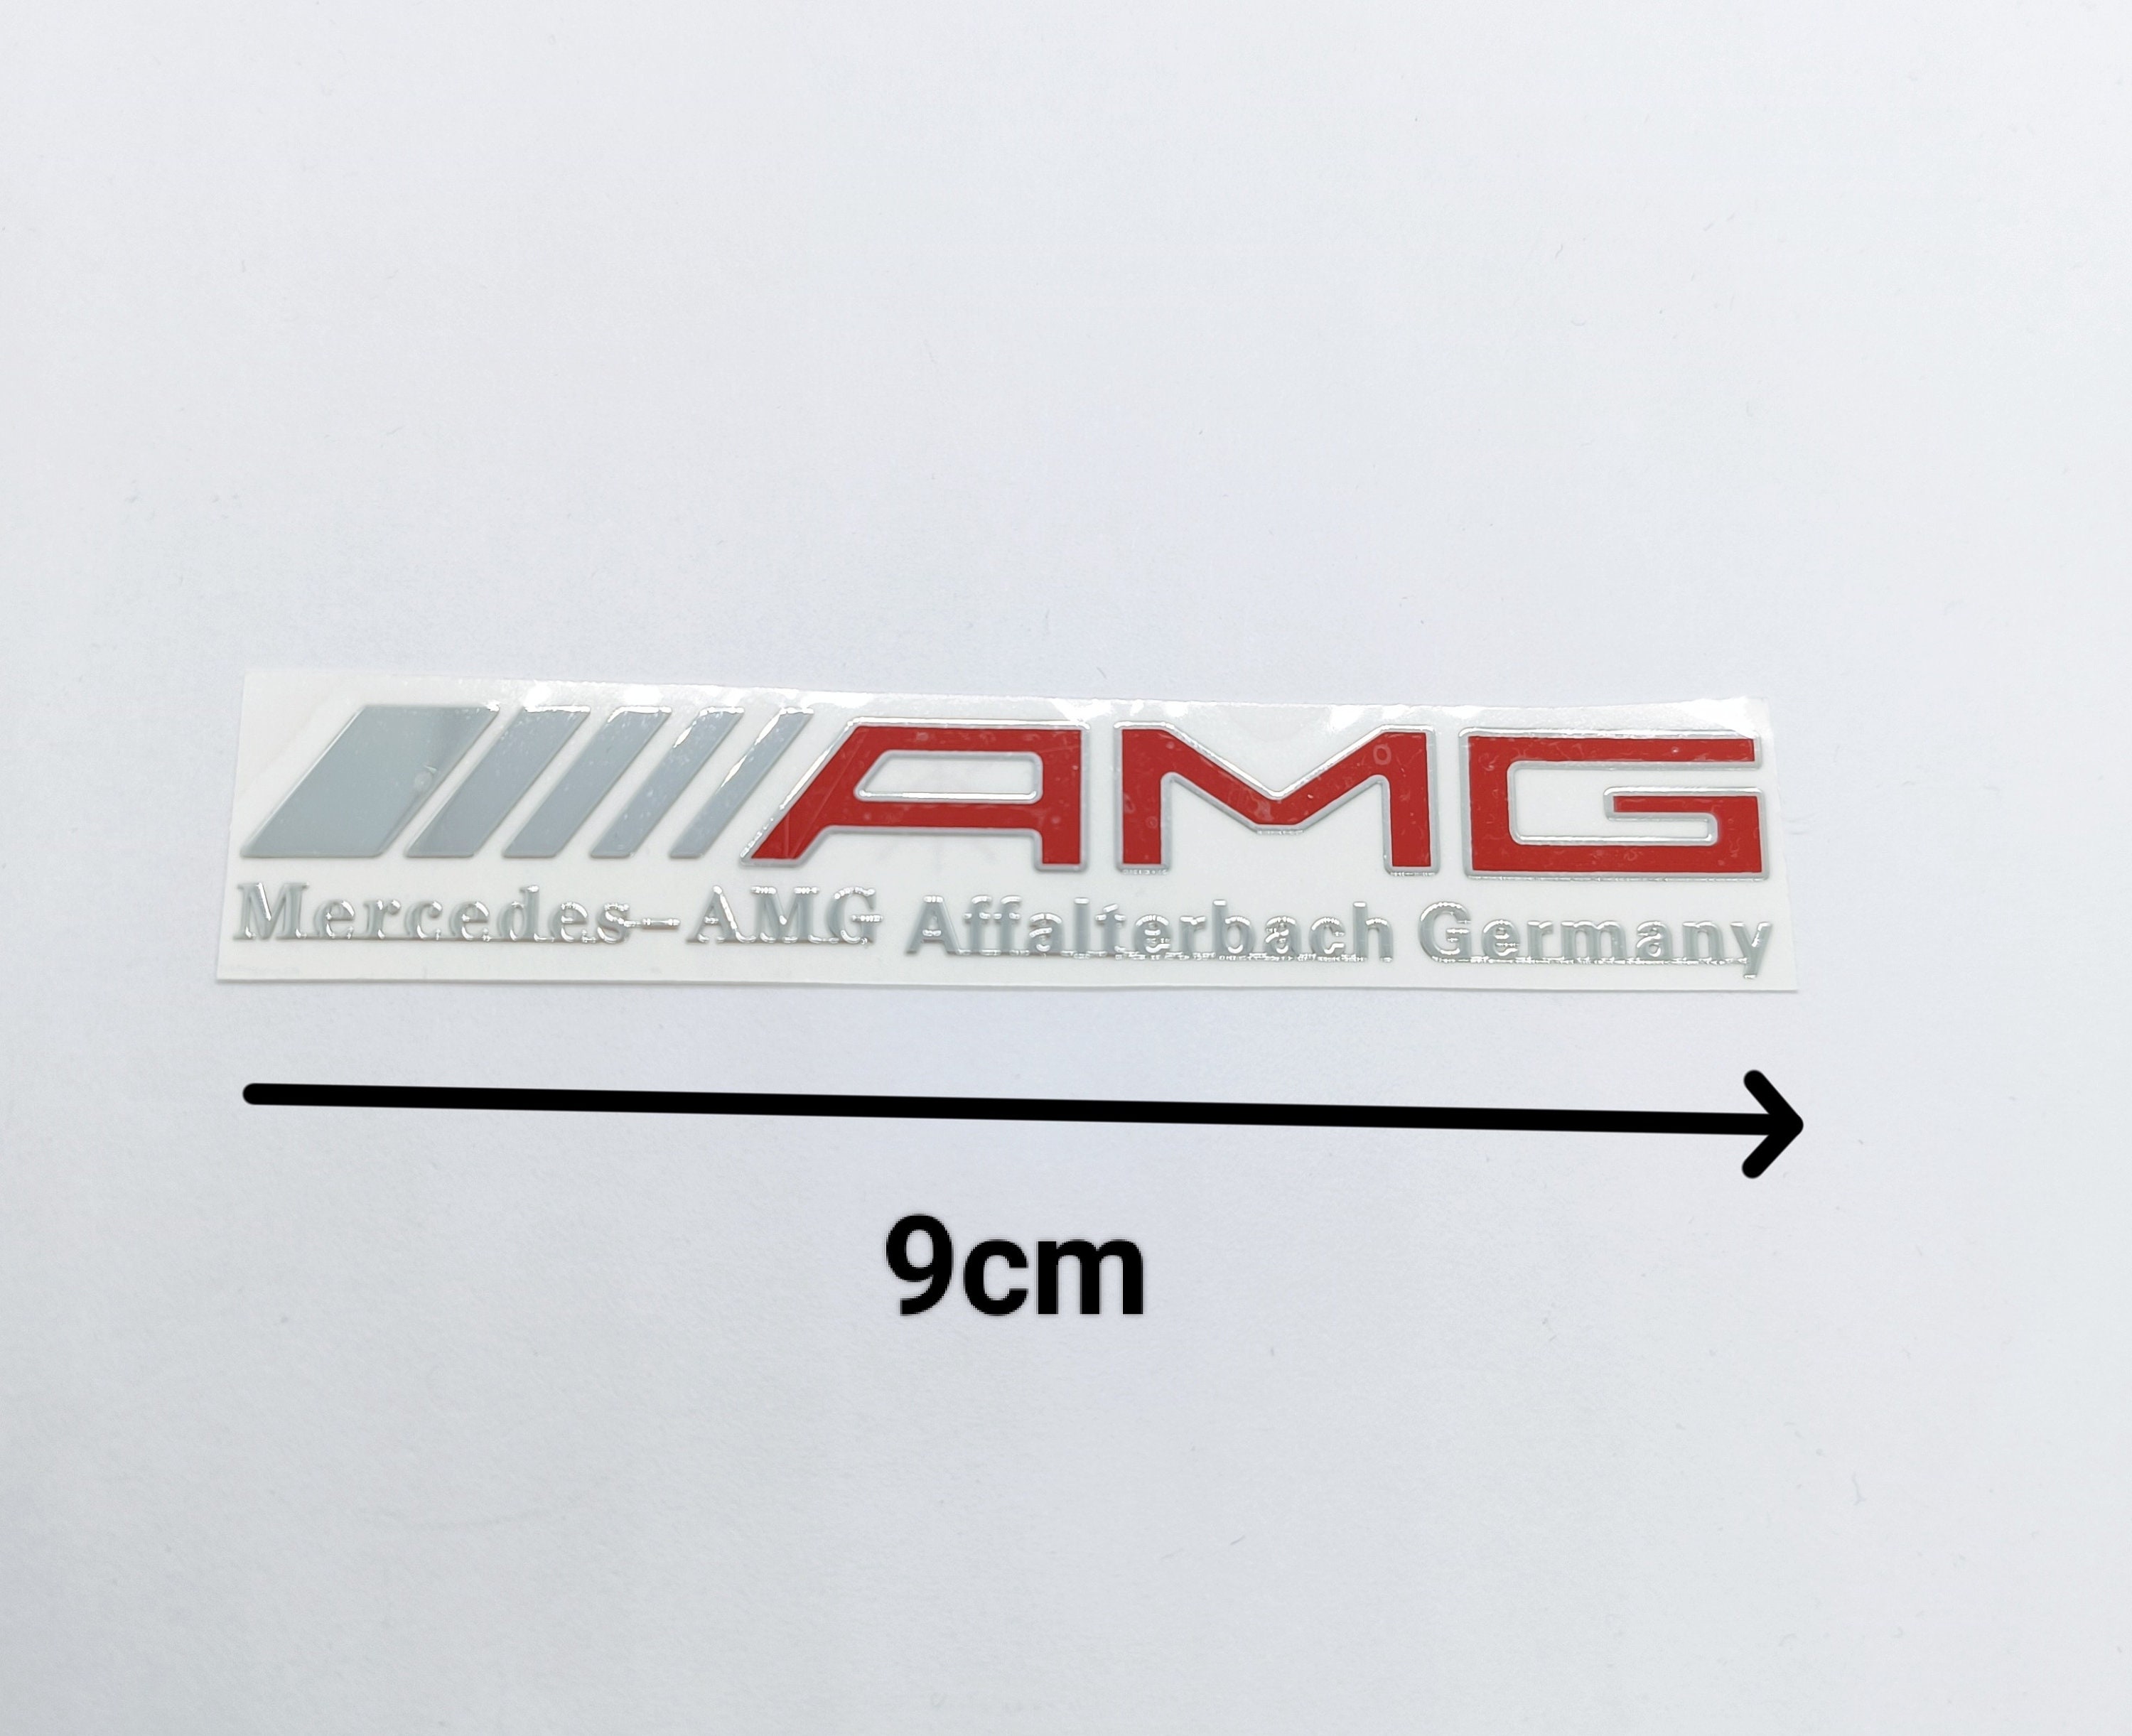 Mercedes 5.5 AMG logo emblem till skärmarna (2-Pack) - Autostyling